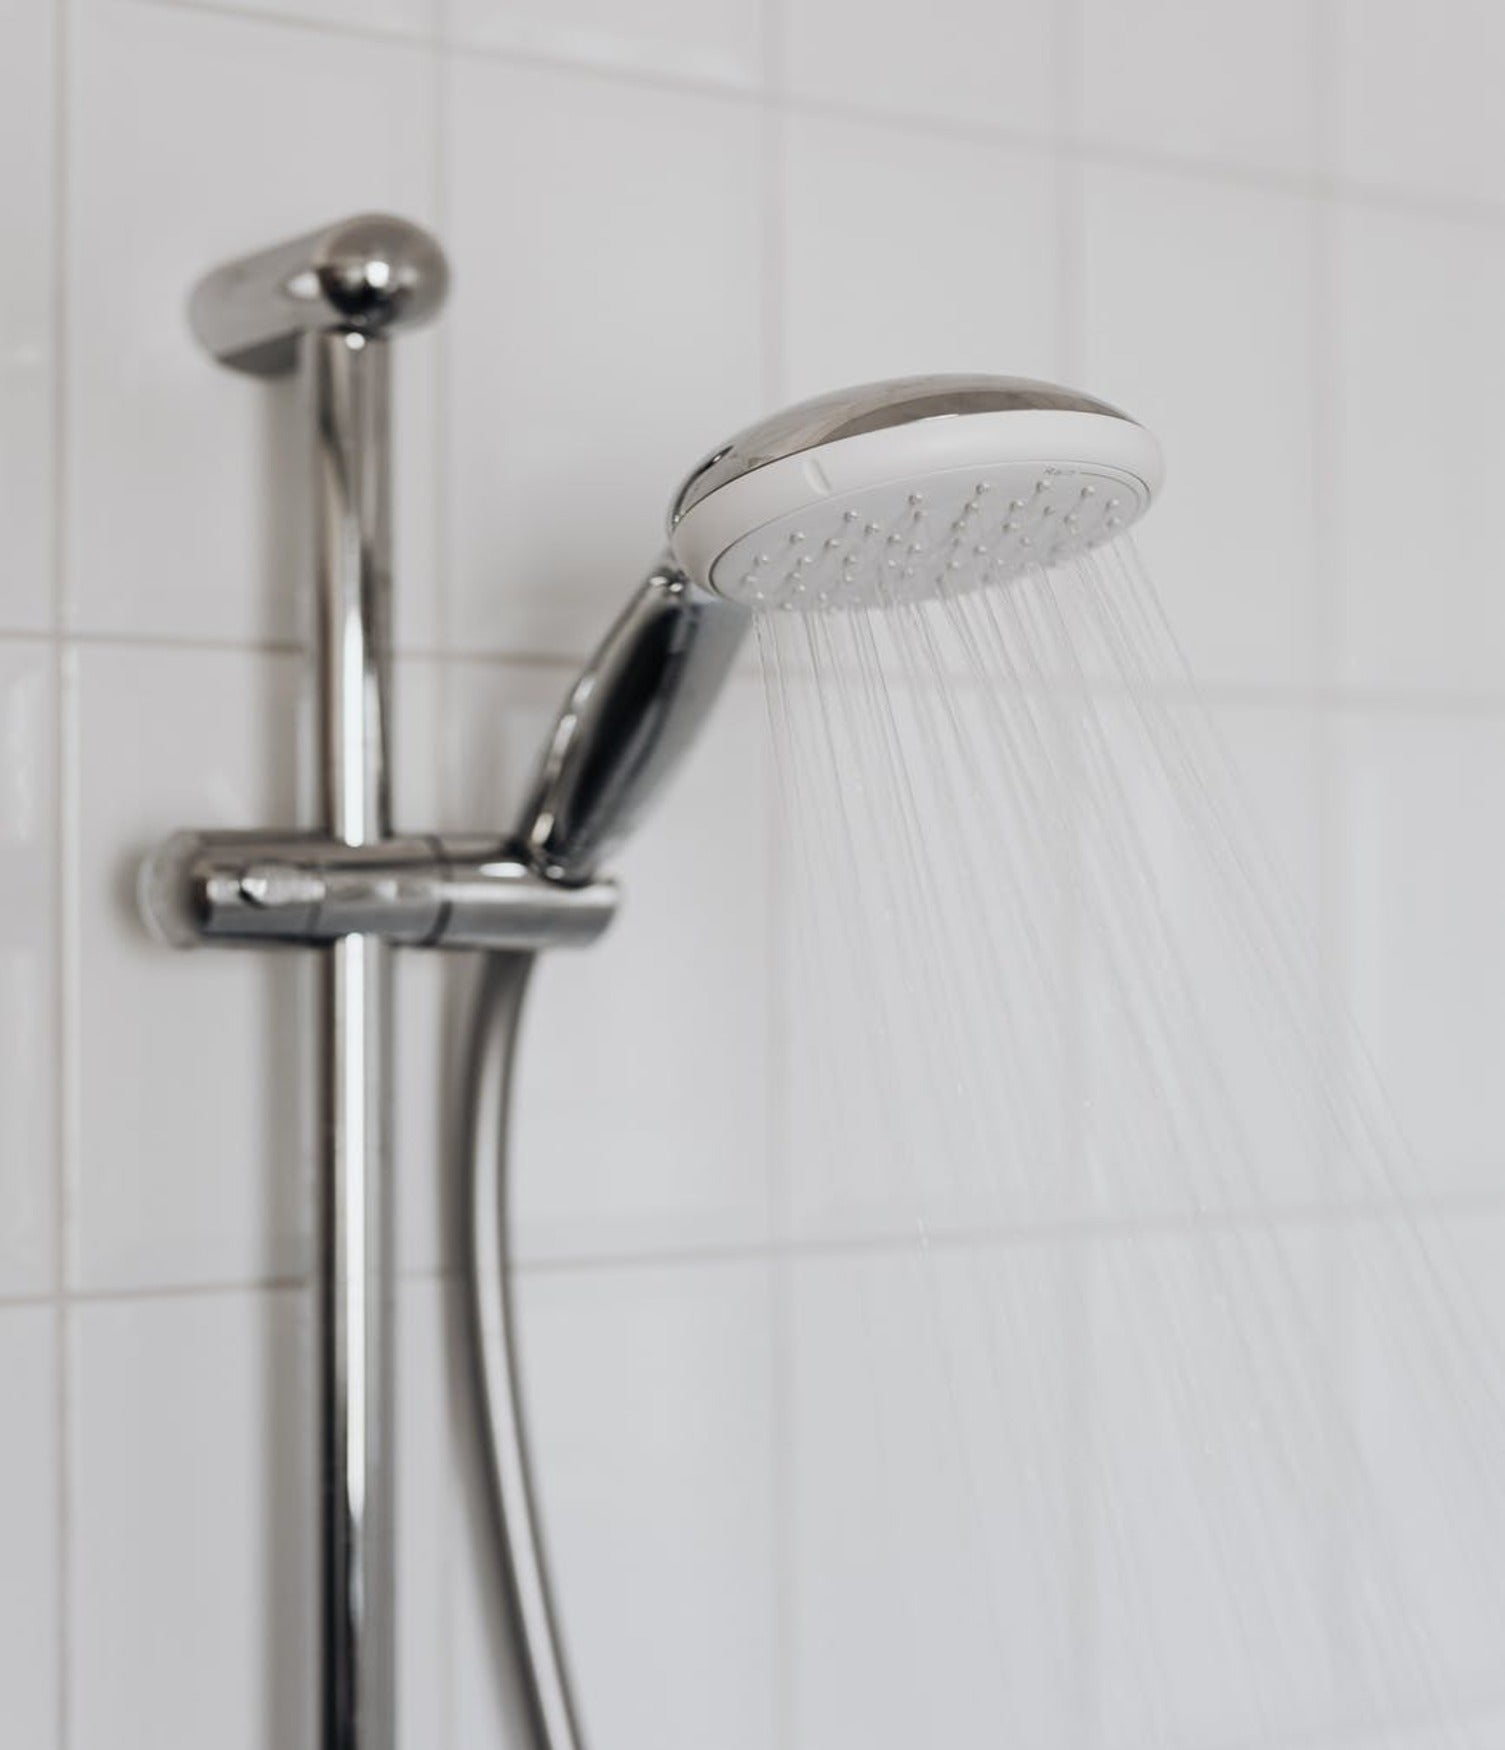 Filtro Baño Ducha Standard - Agua Limpia para un Baño Perfec